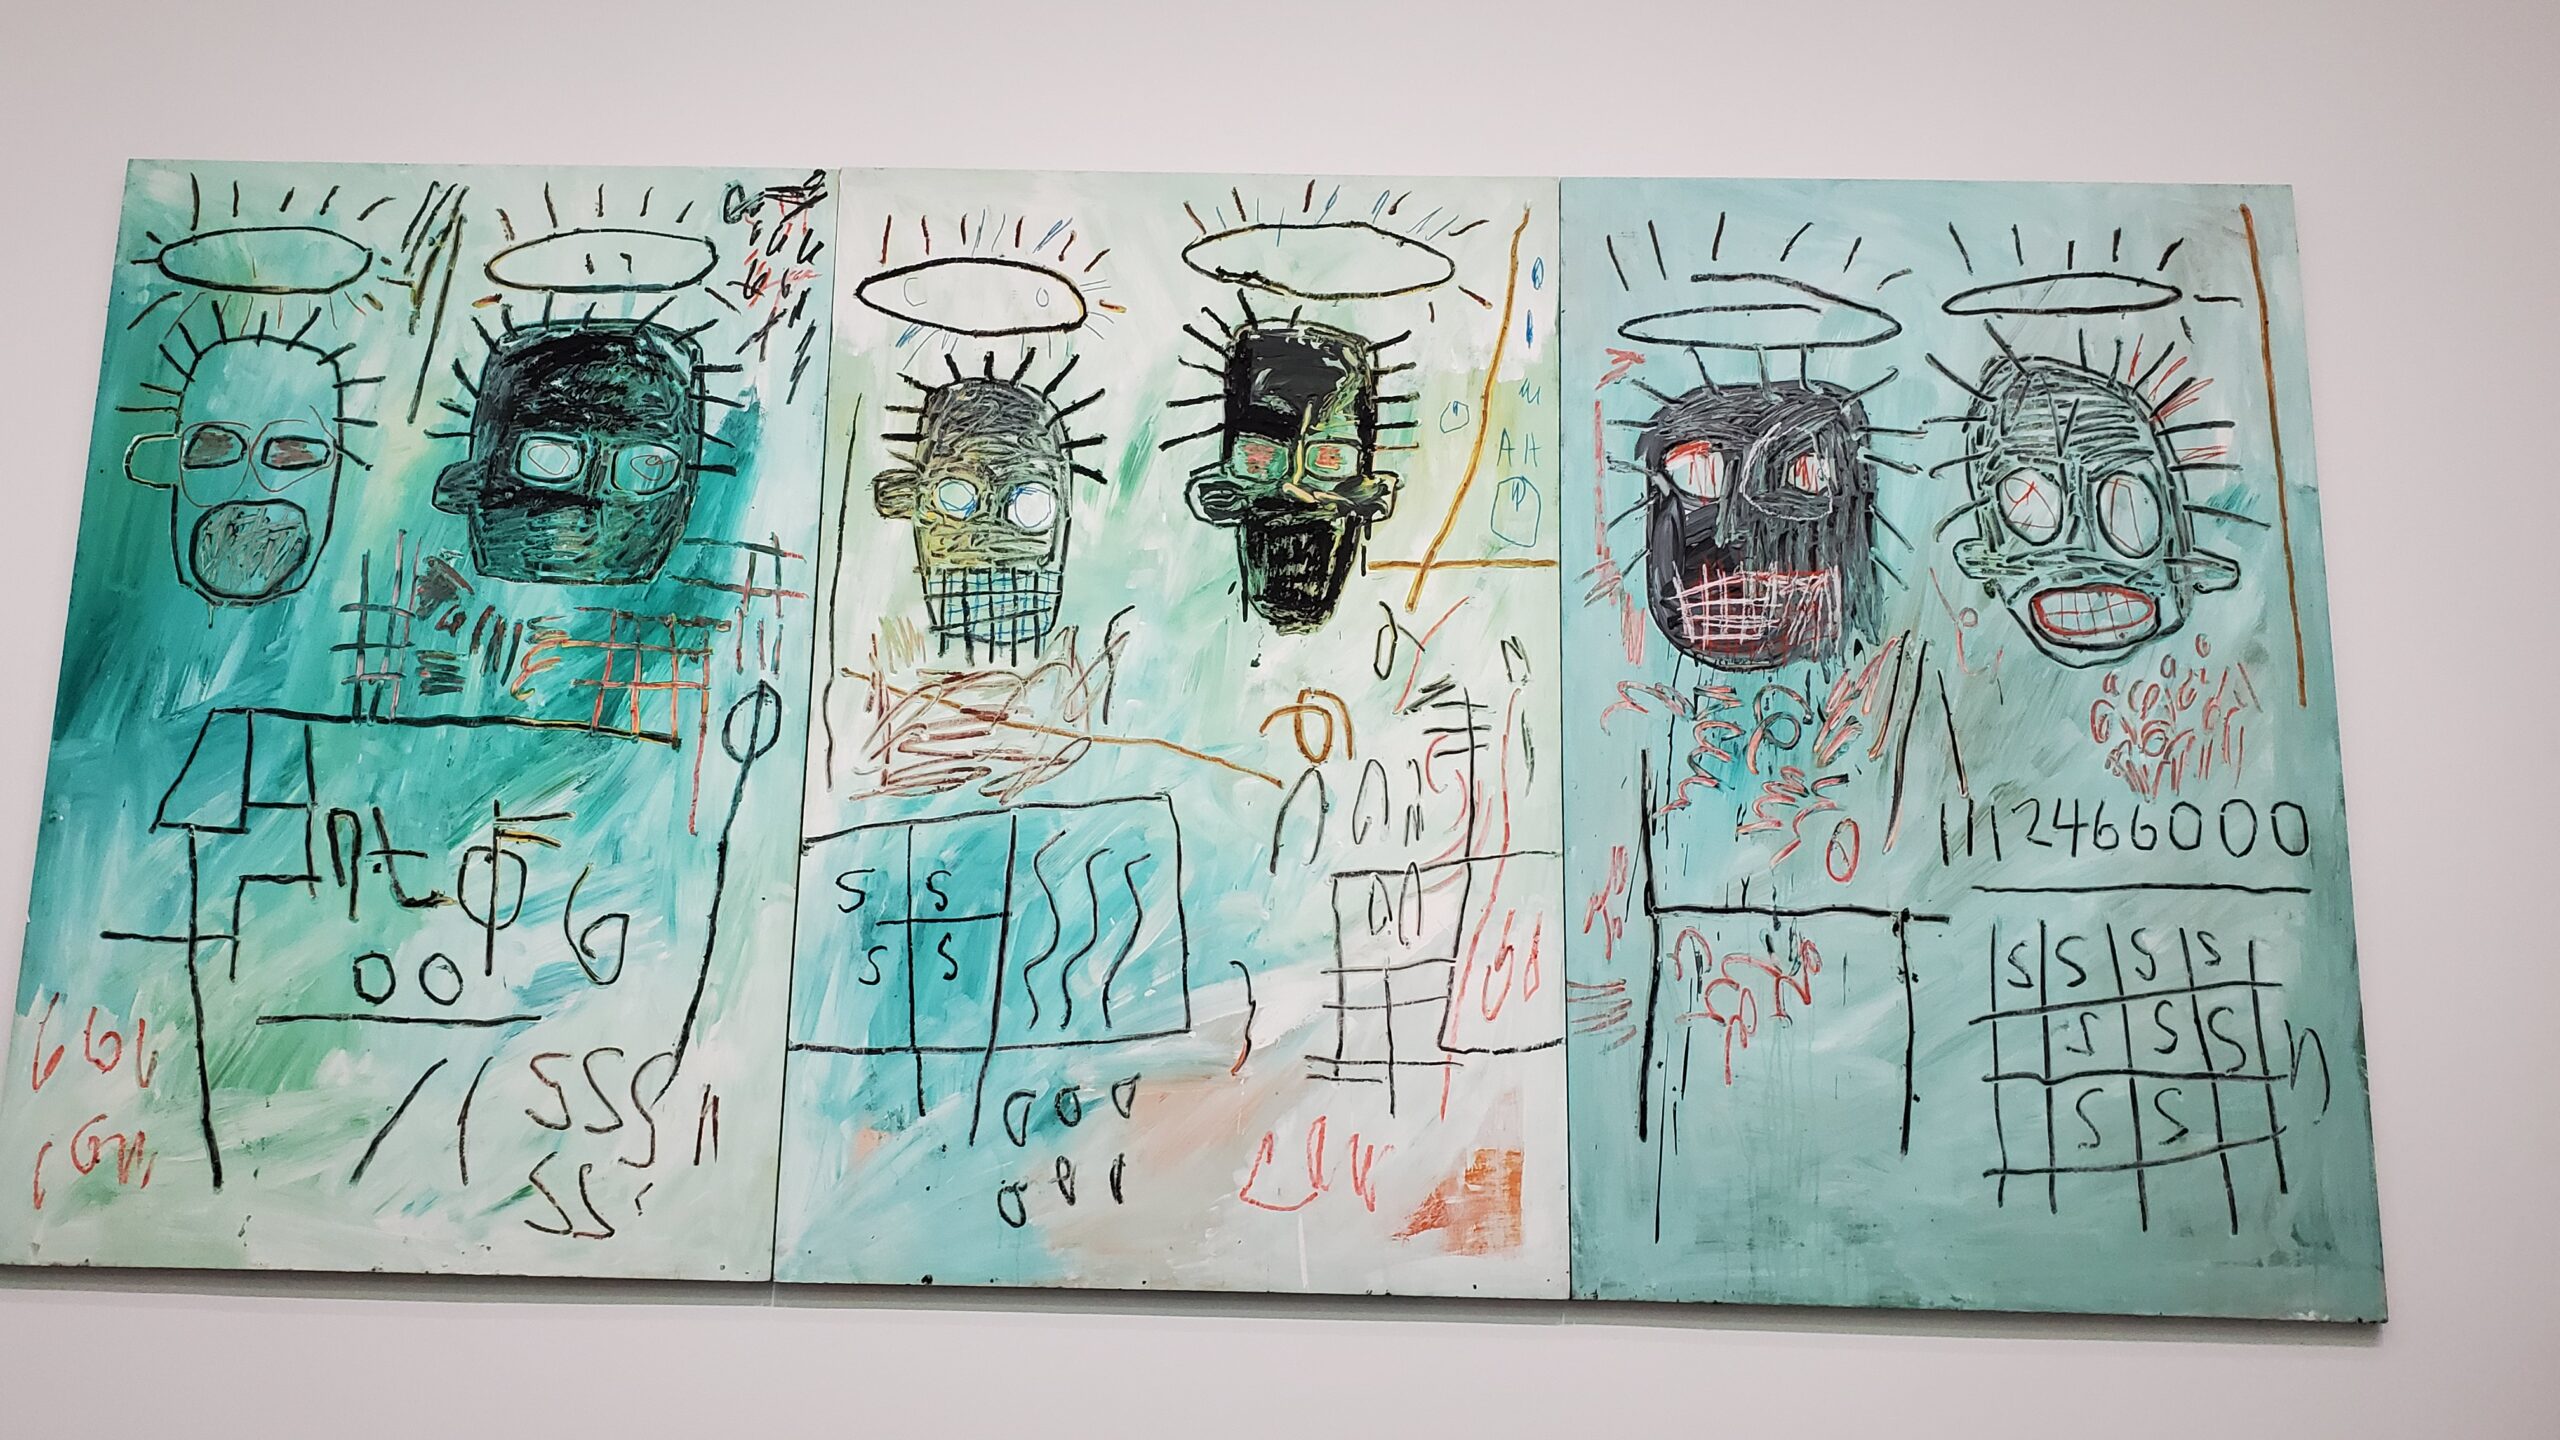  Basquiat at the MFA